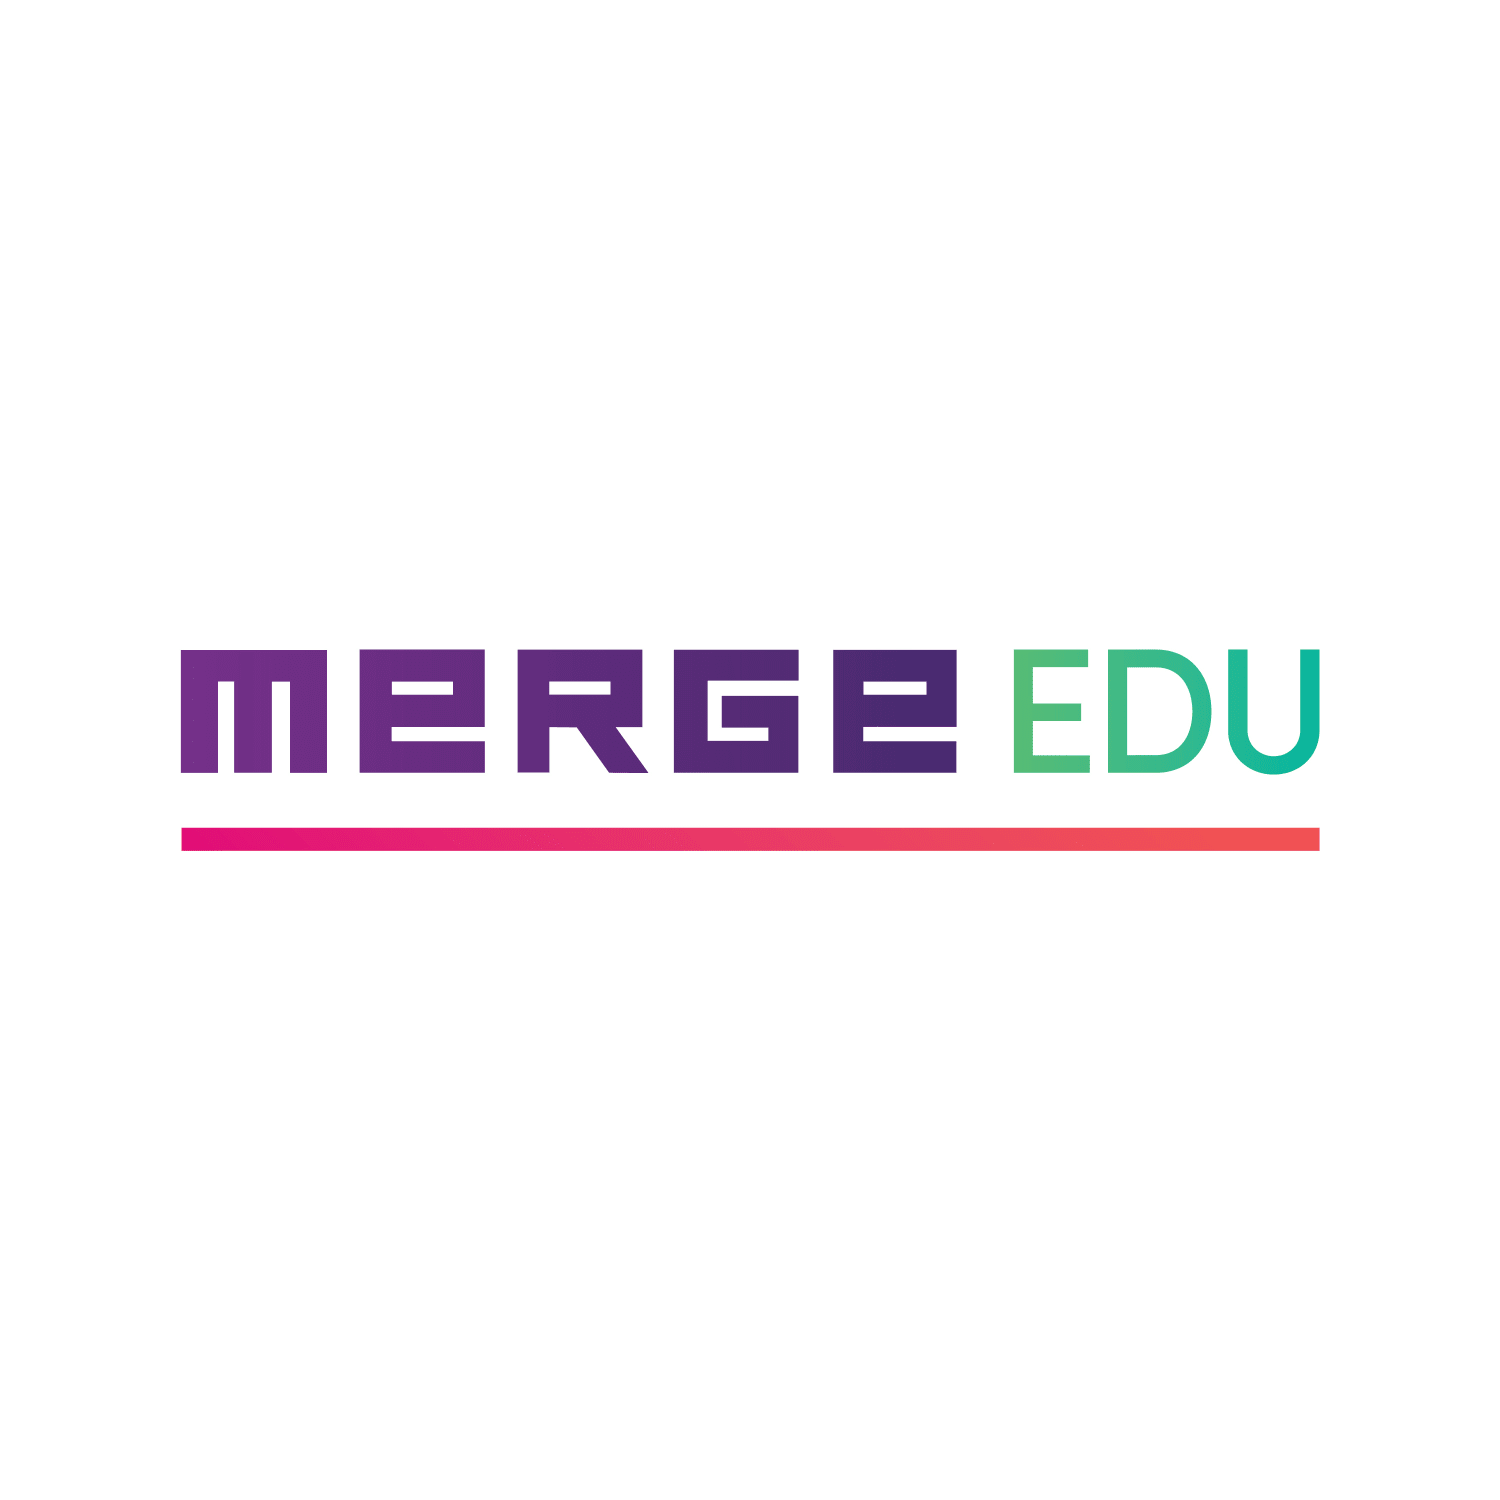 MERGE Logo for active job listings